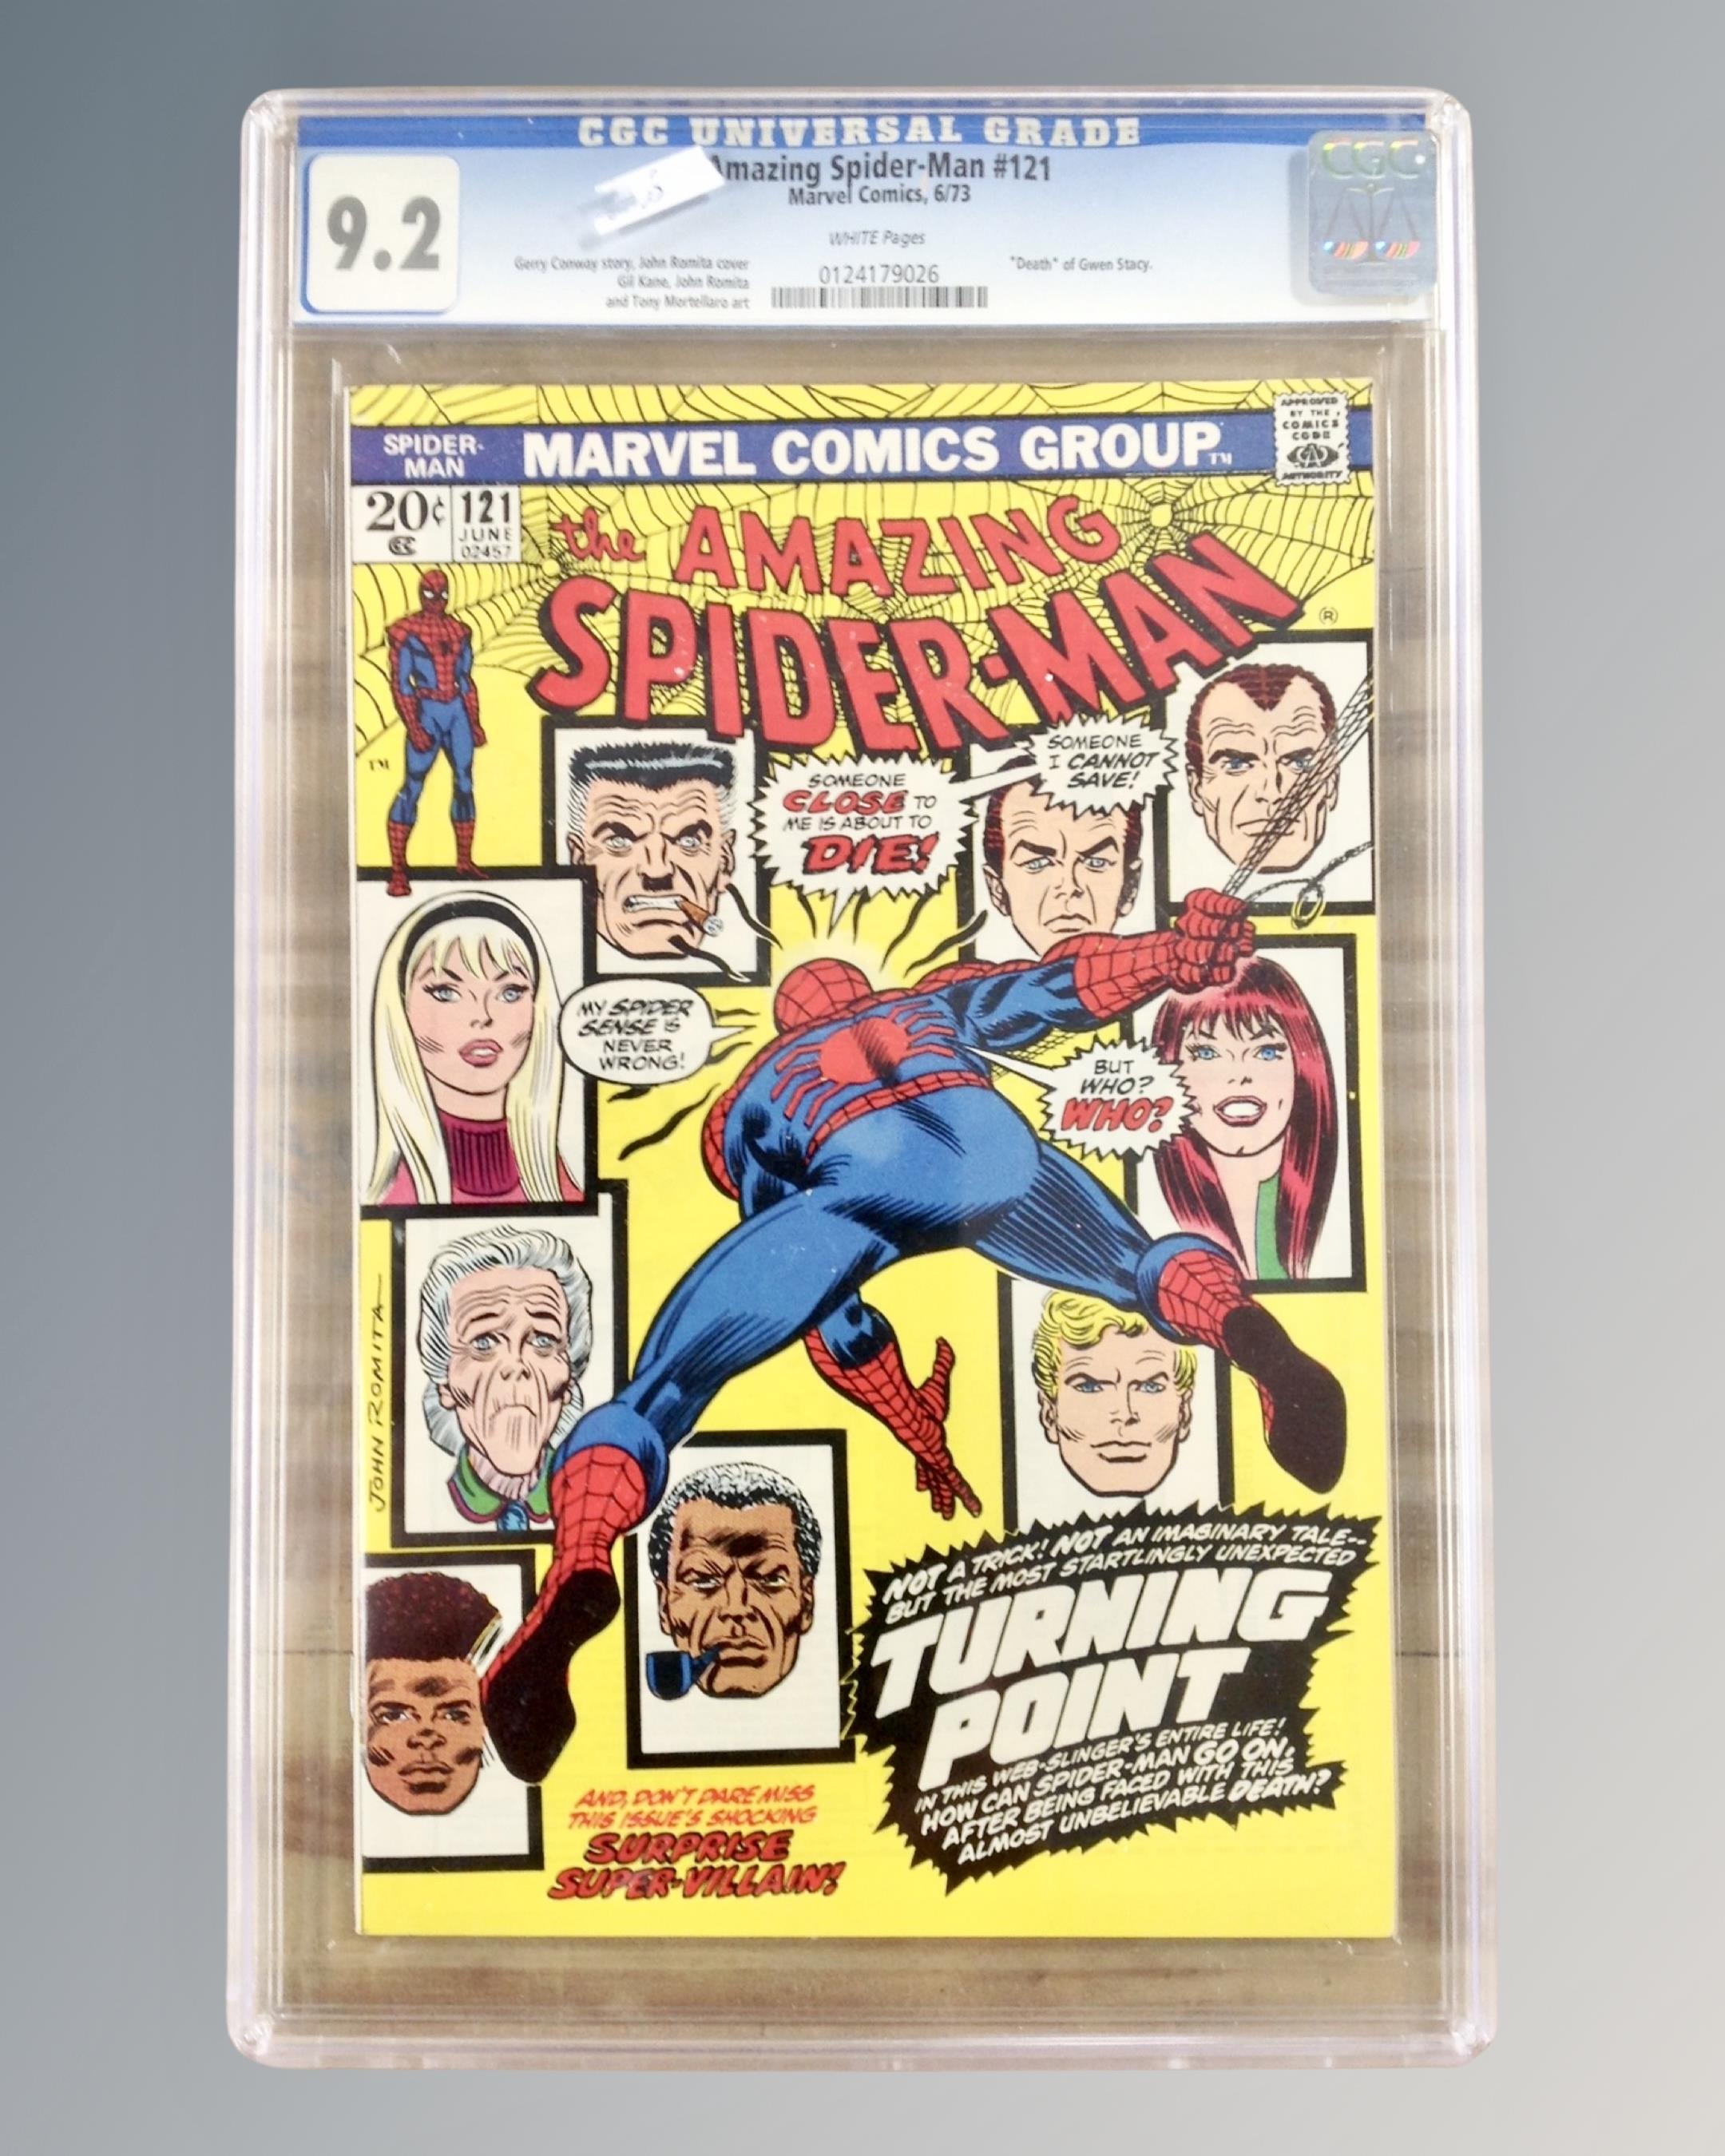 Marvel Comics : CGC Universal Grade, The Amazing Spider-Man #121 comic, slabbed and graded 9.2.